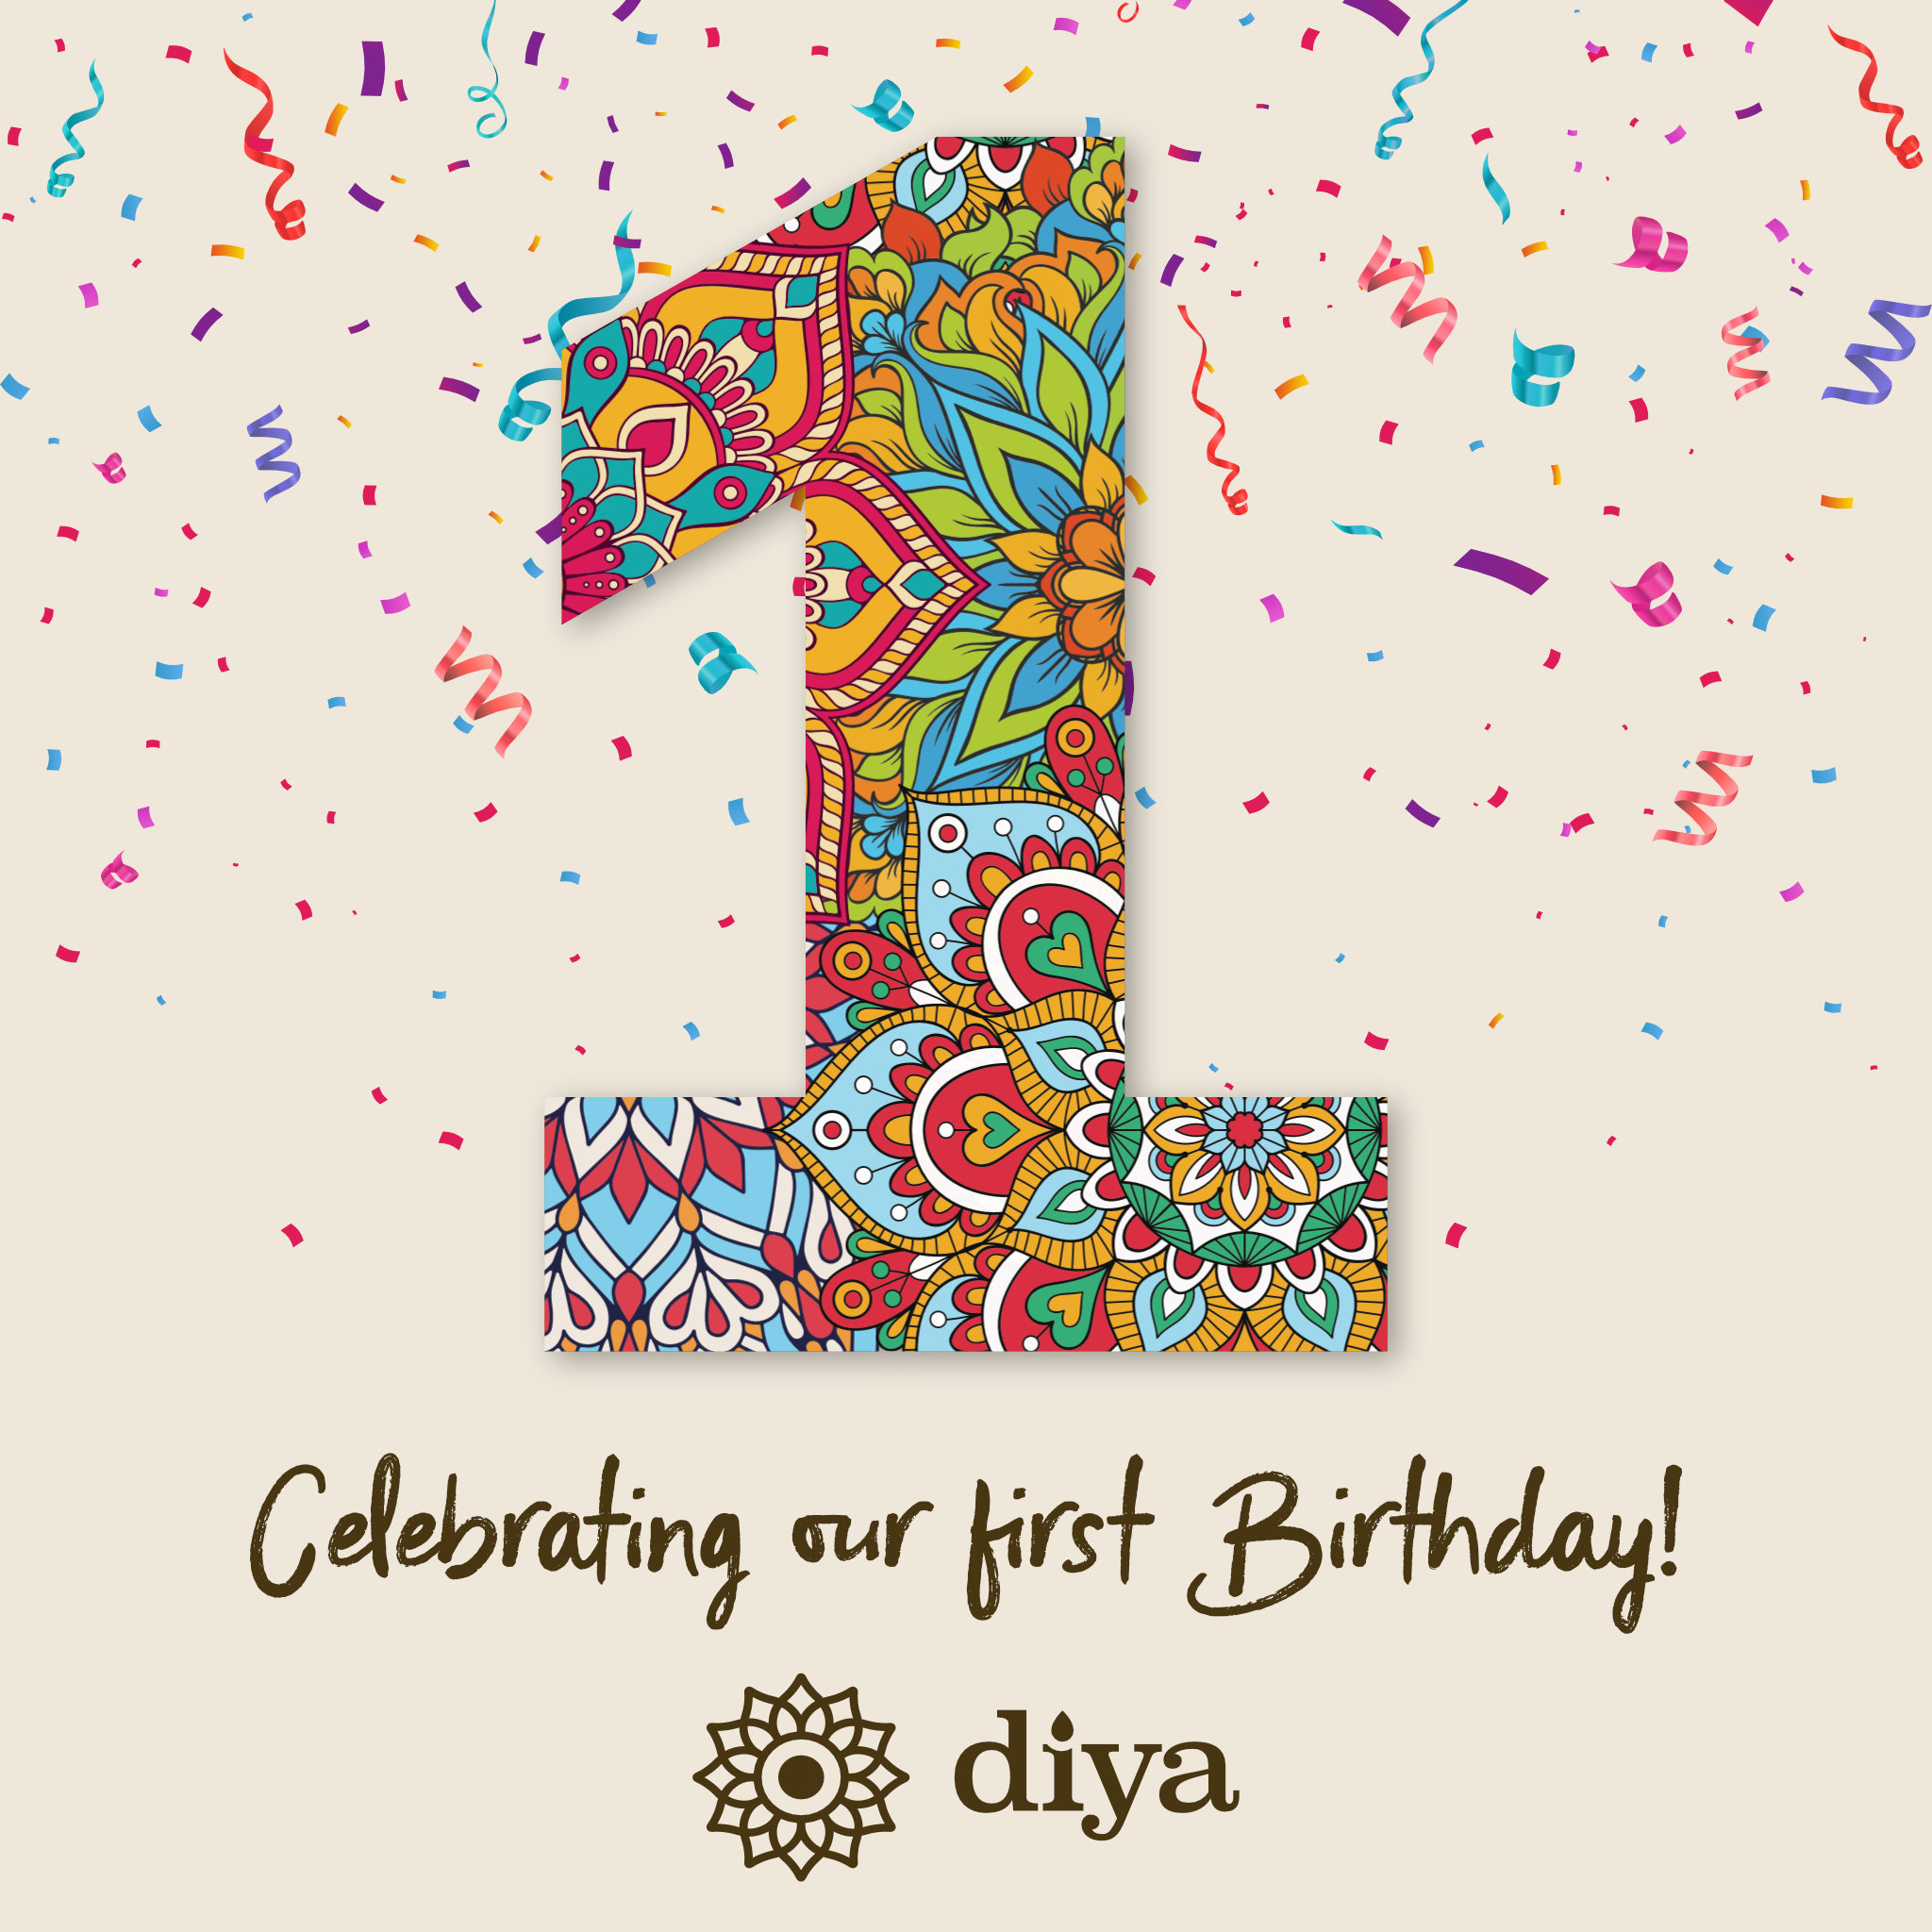 Diya turns one